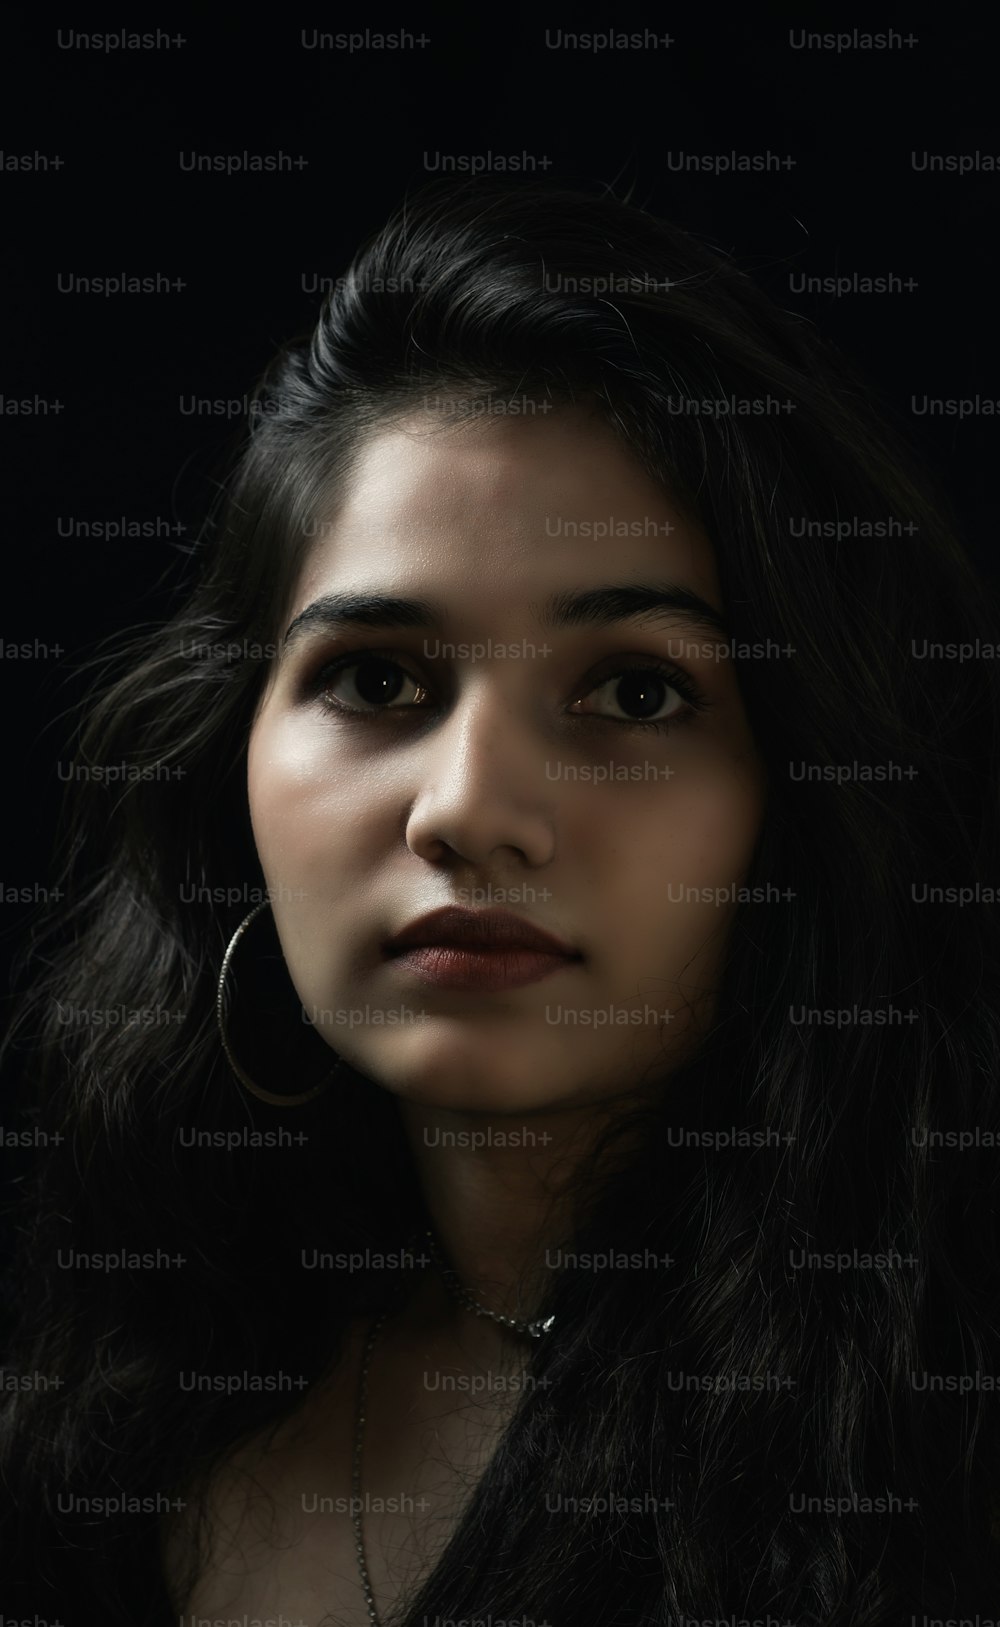 Woman in black. low key portrait of  beautiful Indian girl